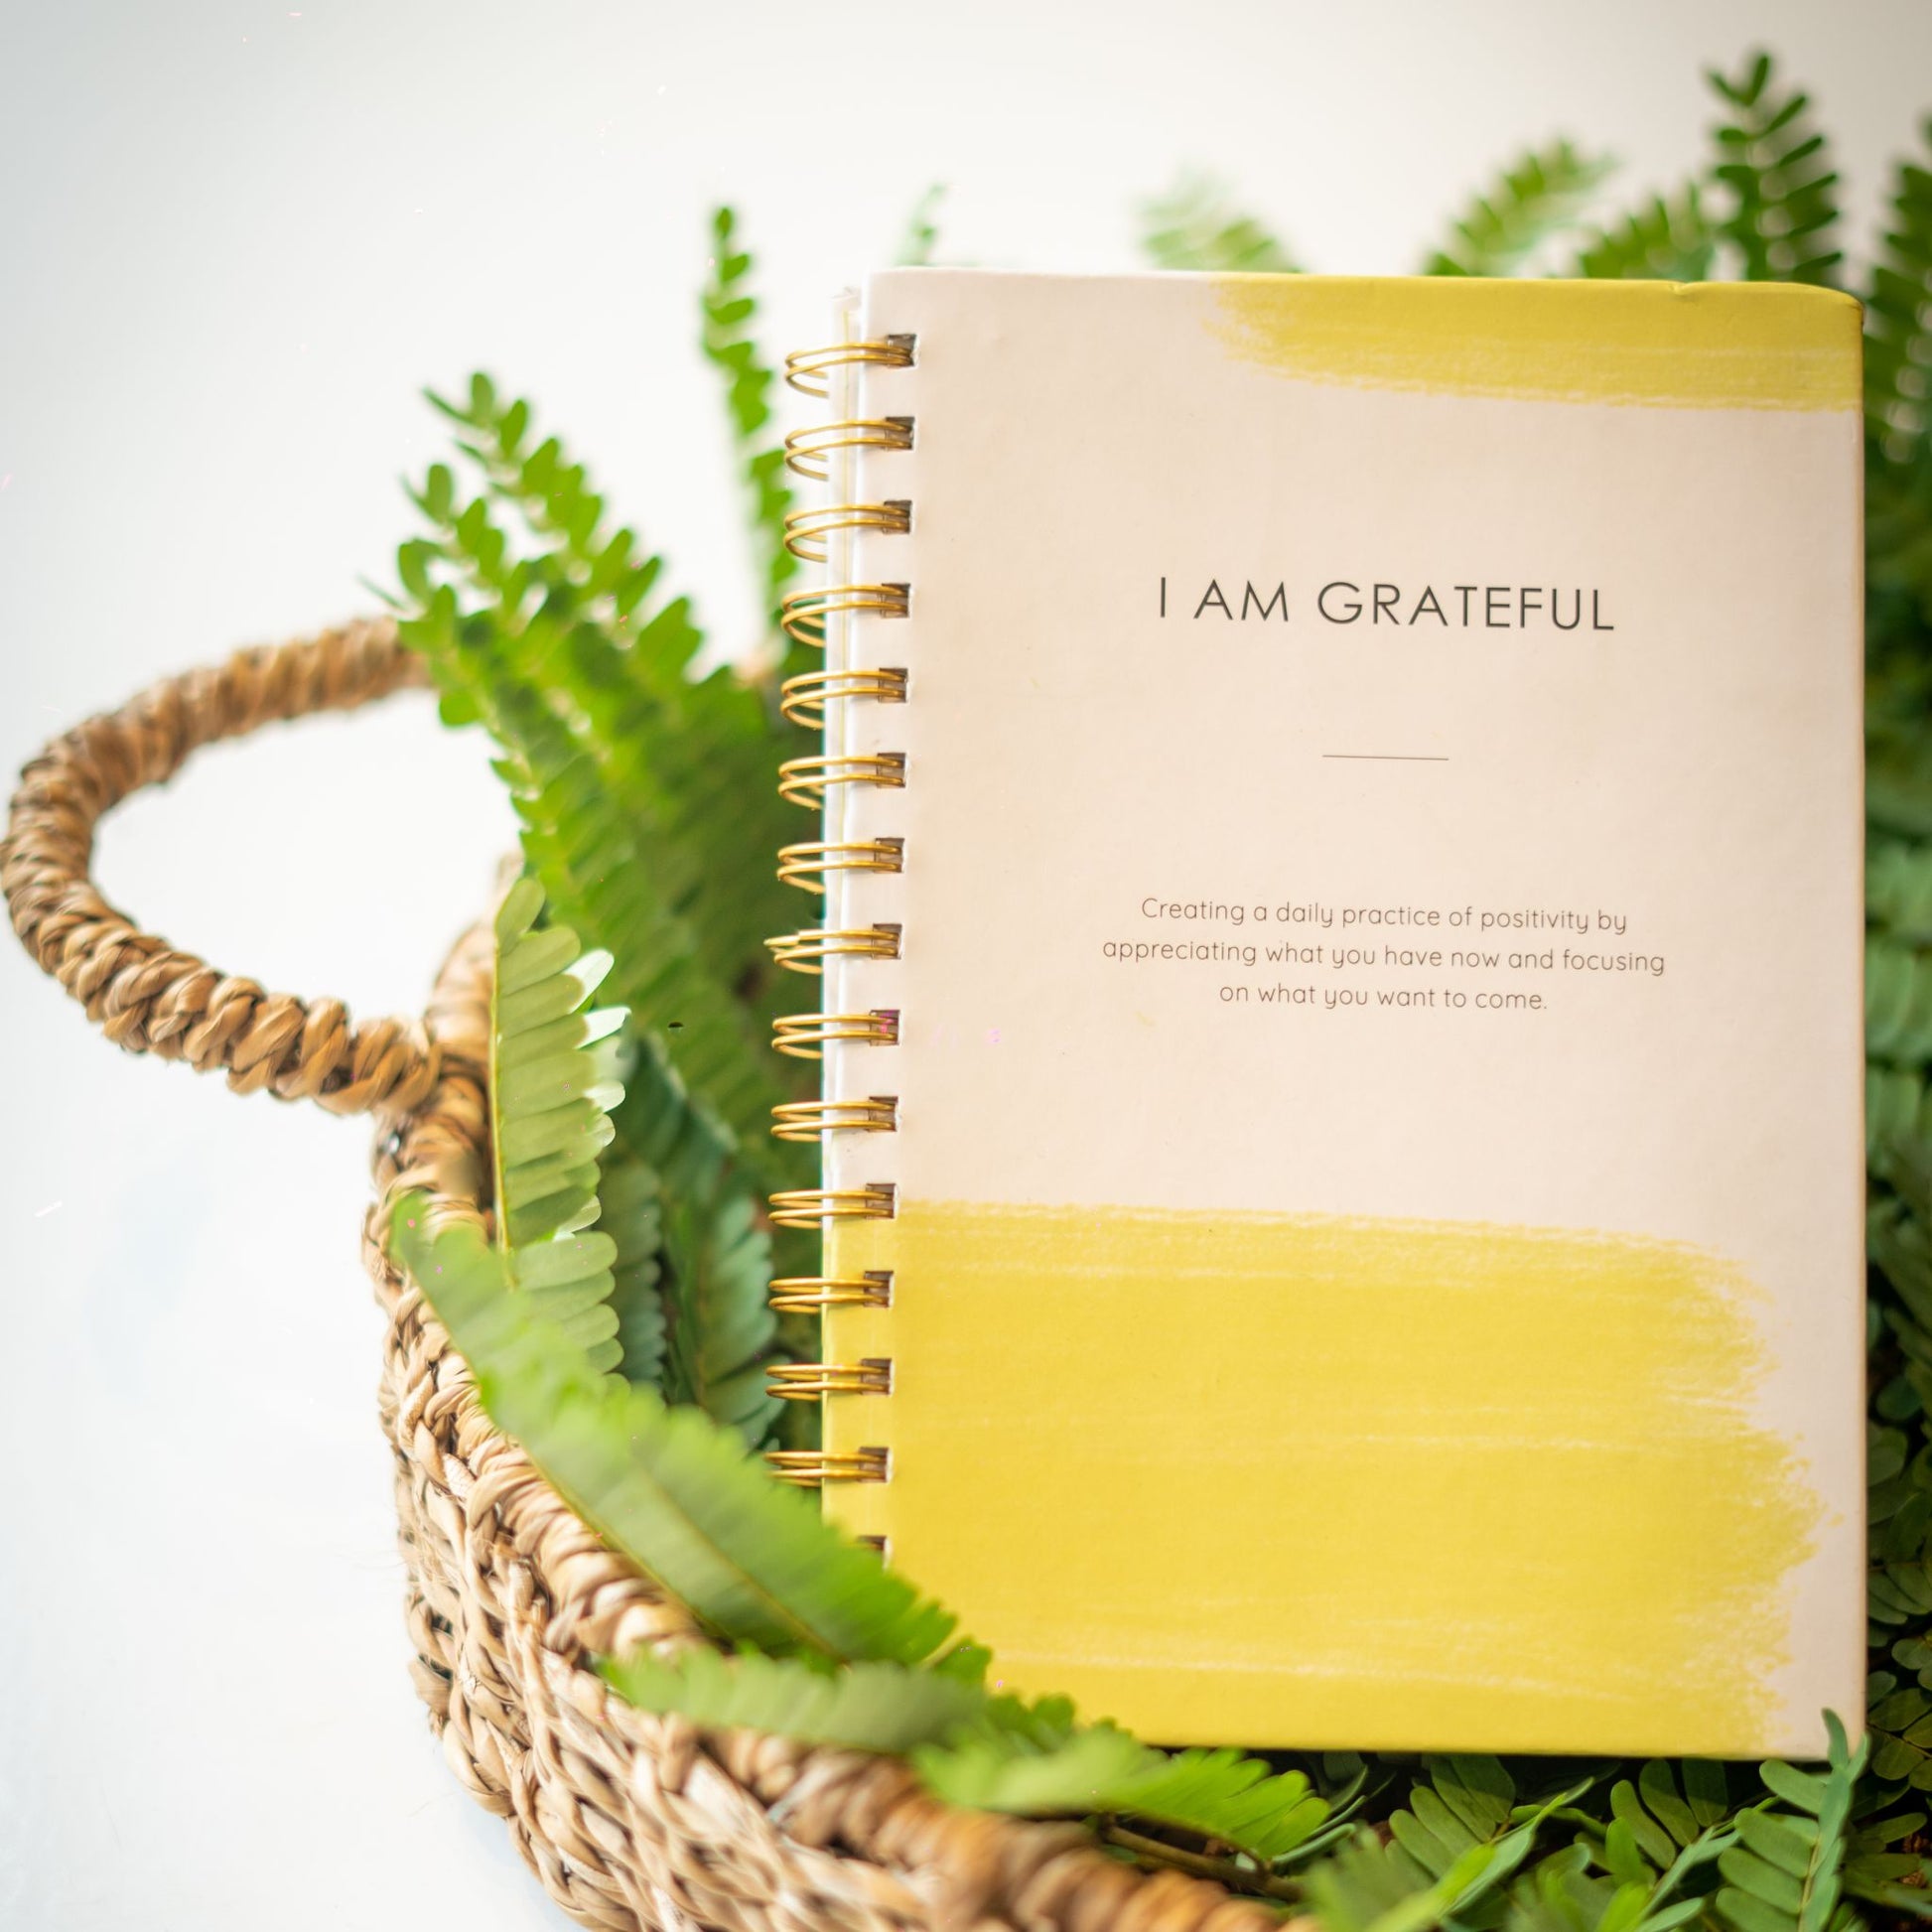 CHOOSE GRATITUDE CHANGE THE WORLD: A DAILY GRATITUDE JOURNAL – Gratitude  Gifted